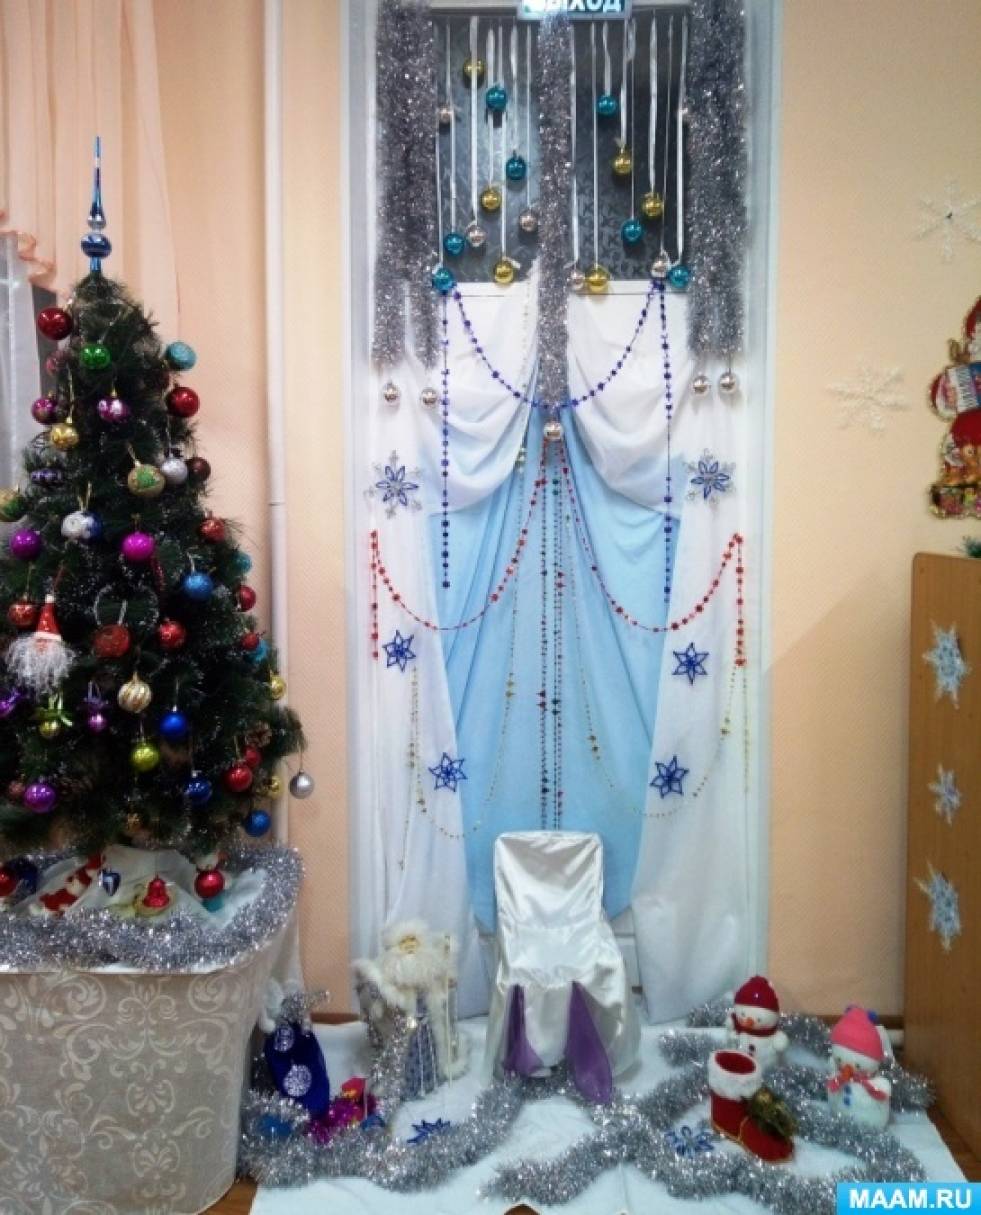 Петербург: куда сходить с ребёнком на новогодних каникулах?